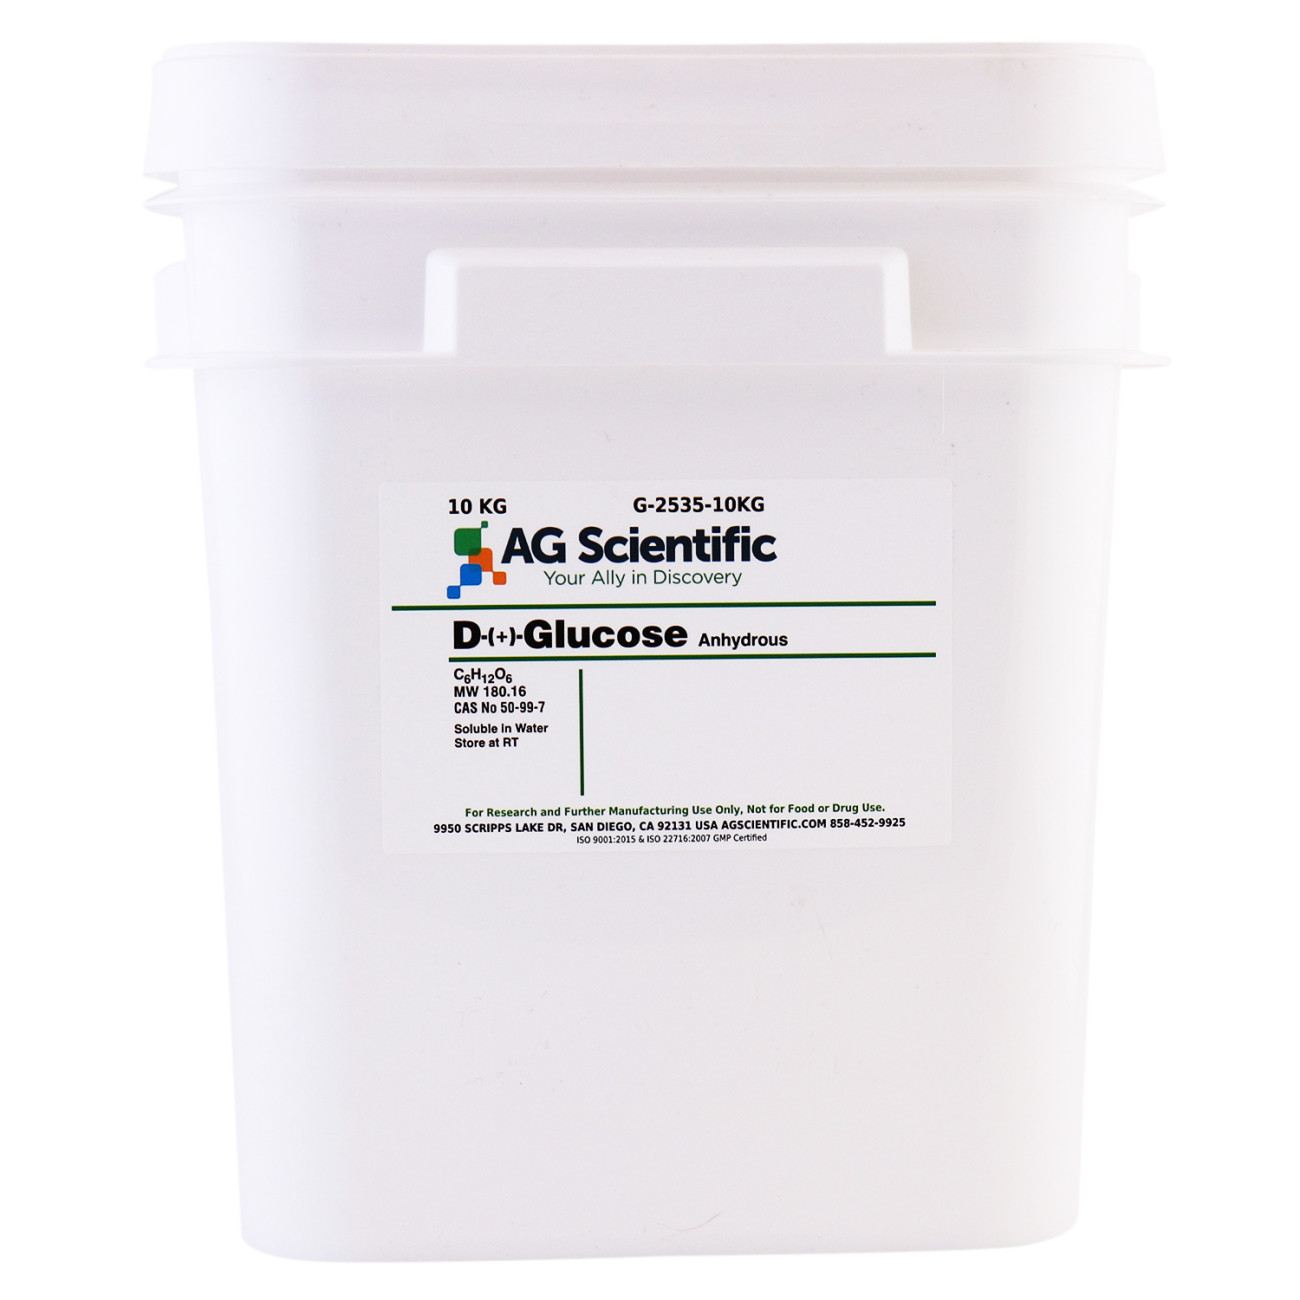 D-(+)-Glucose [Dextrose Anhydrous], USP Grade, 10 KG